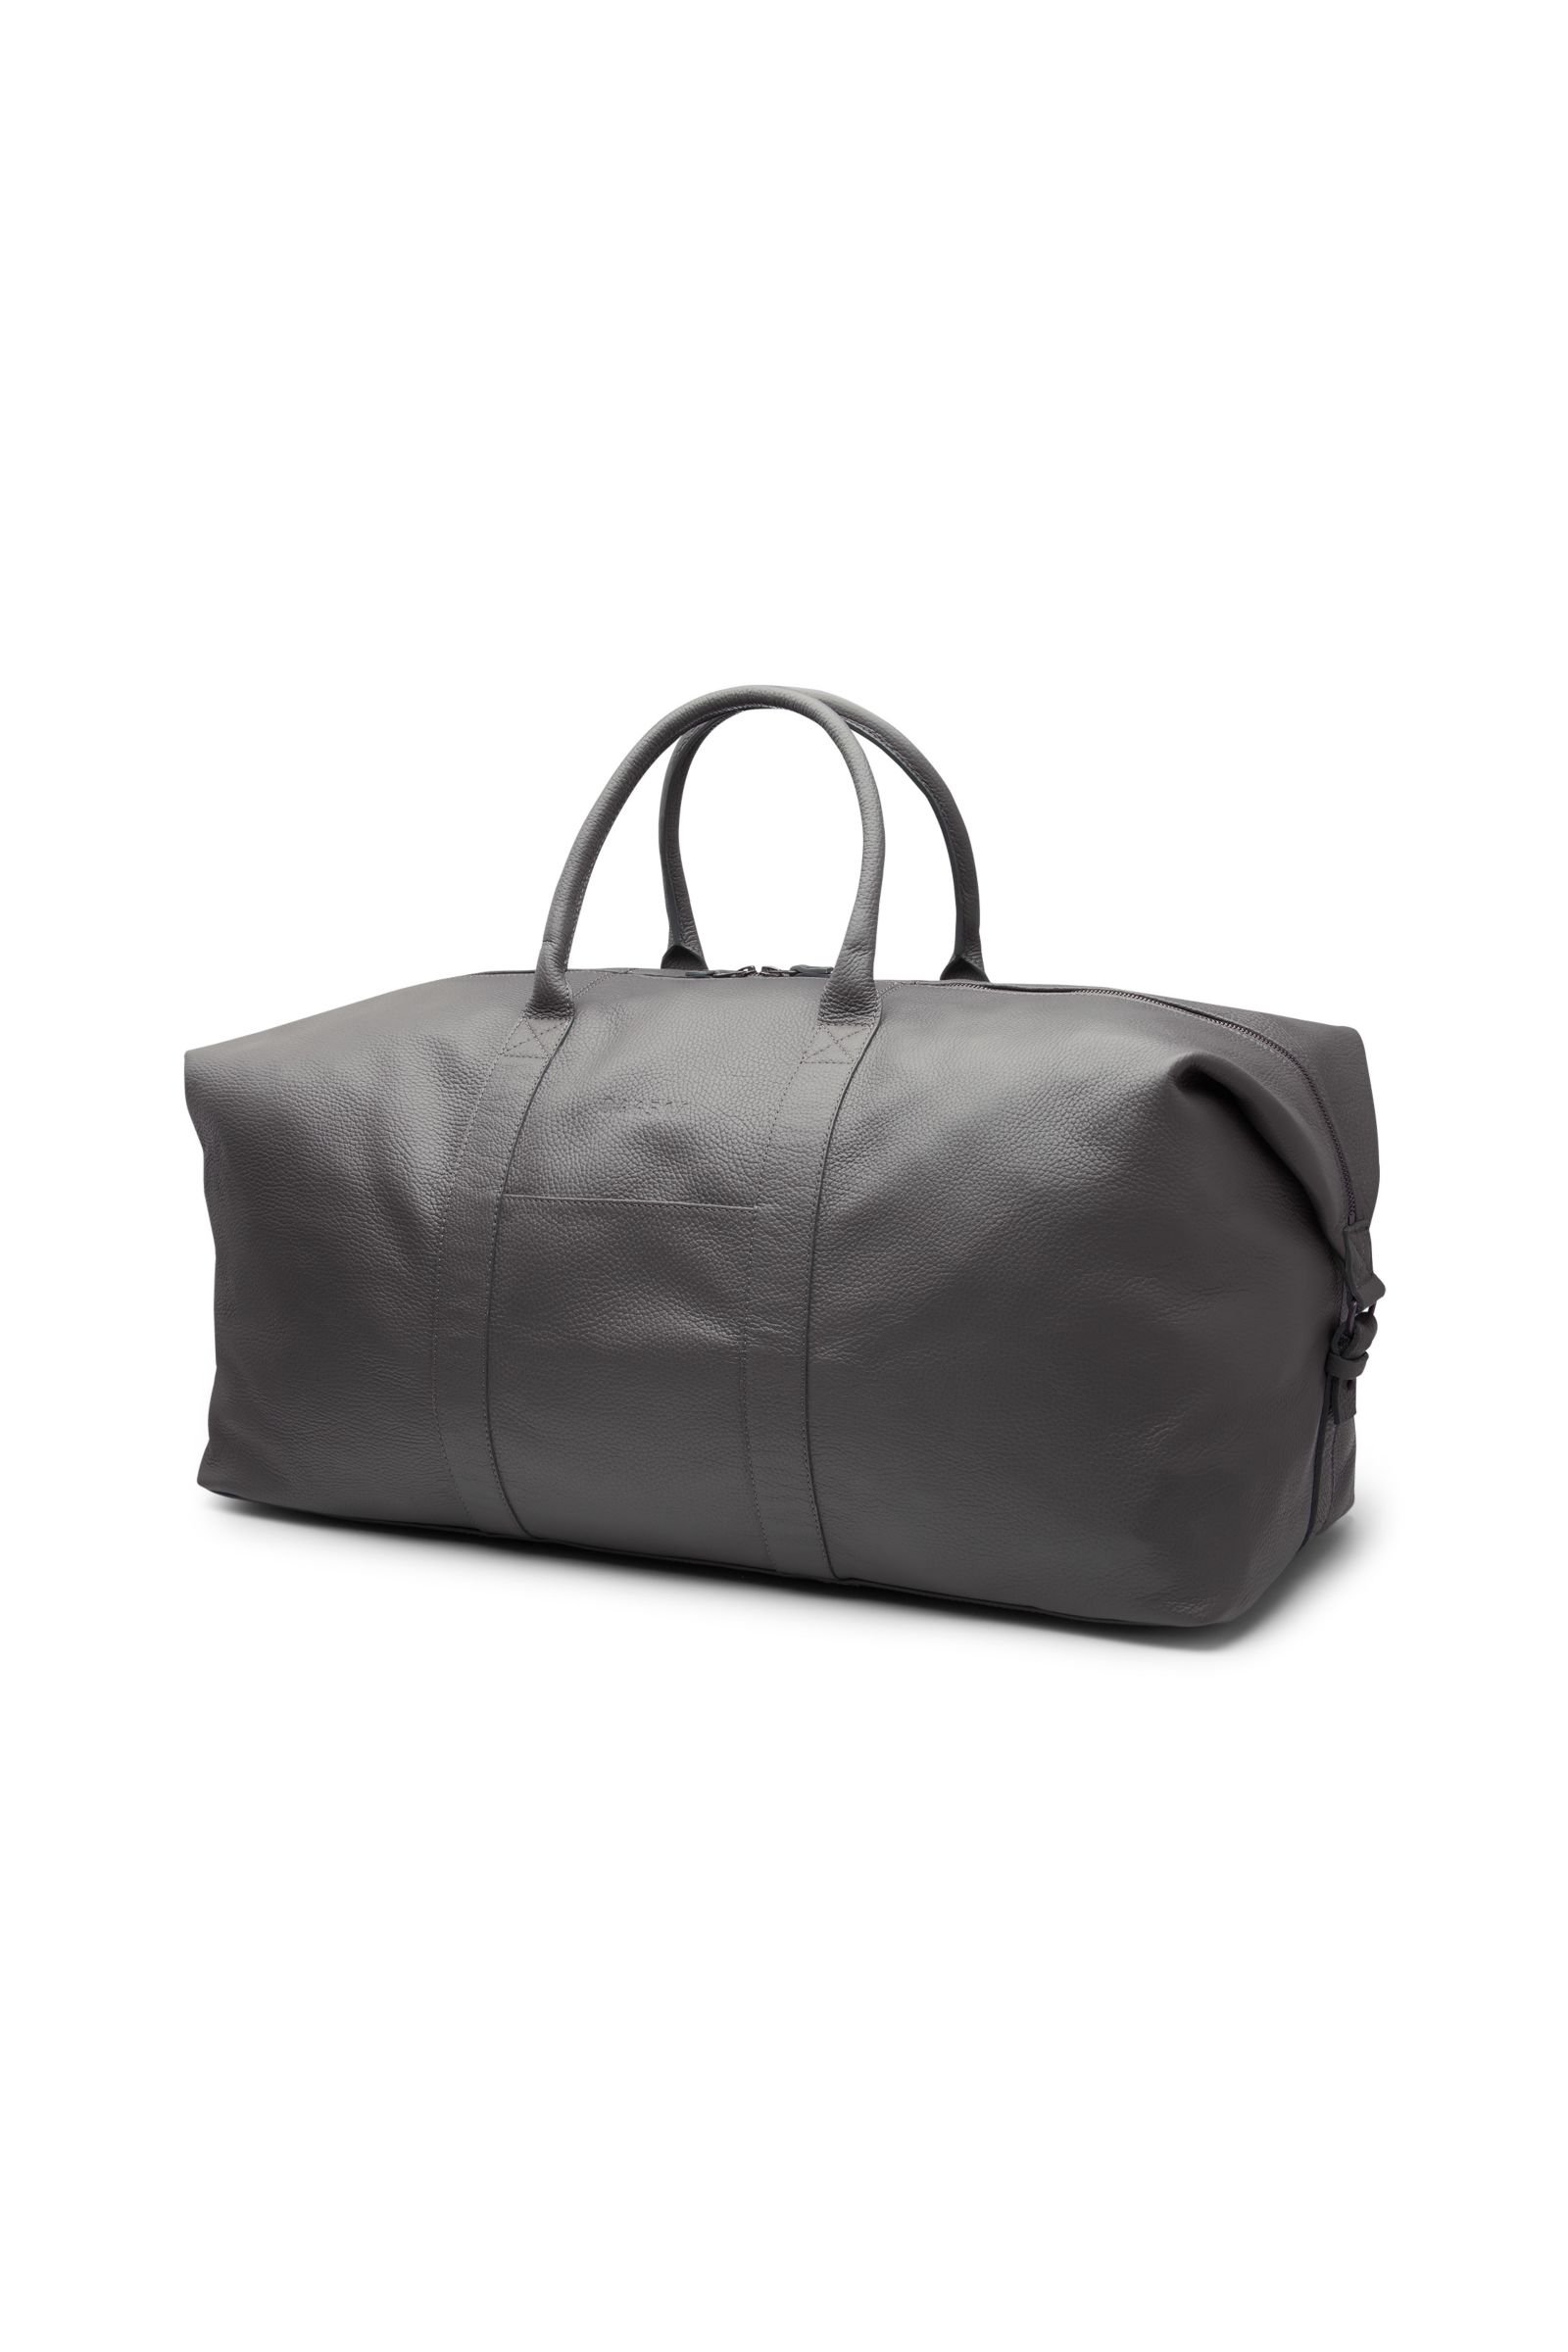 Travel bag grey